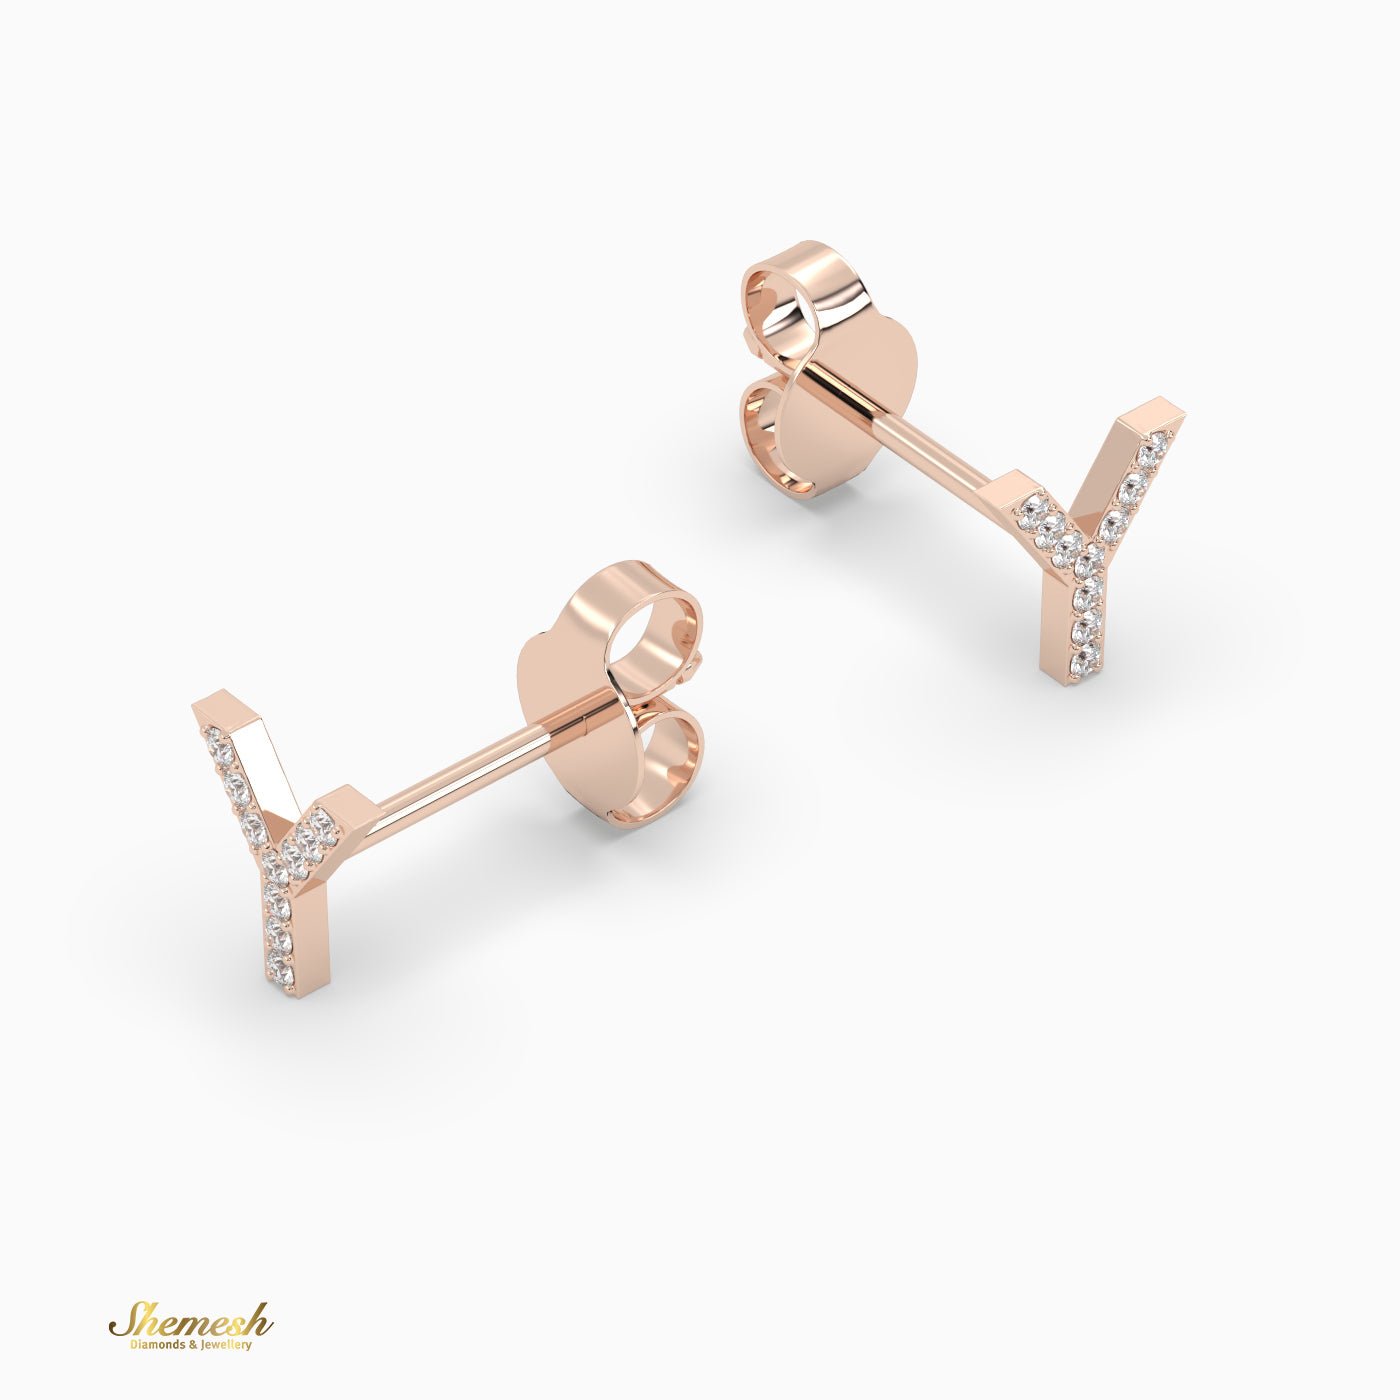 18K Gold "Y" Initial Stud Earrings - shemesh_diamonds